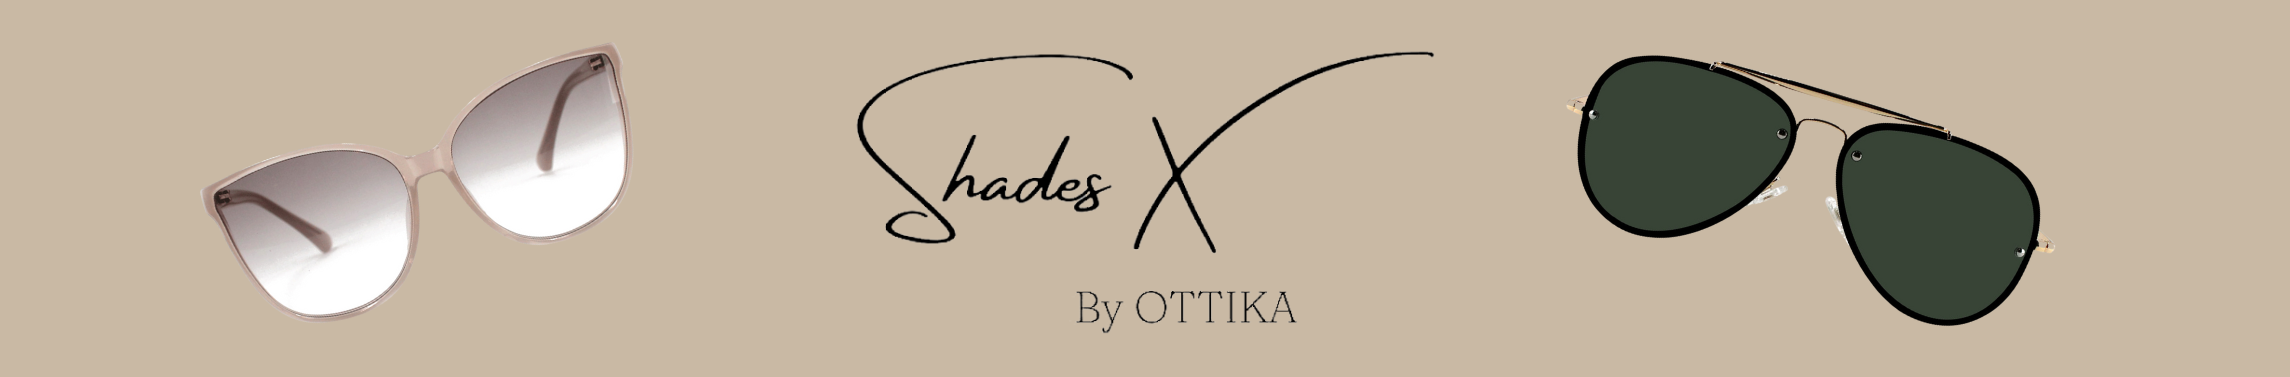 Shades X By Ottika